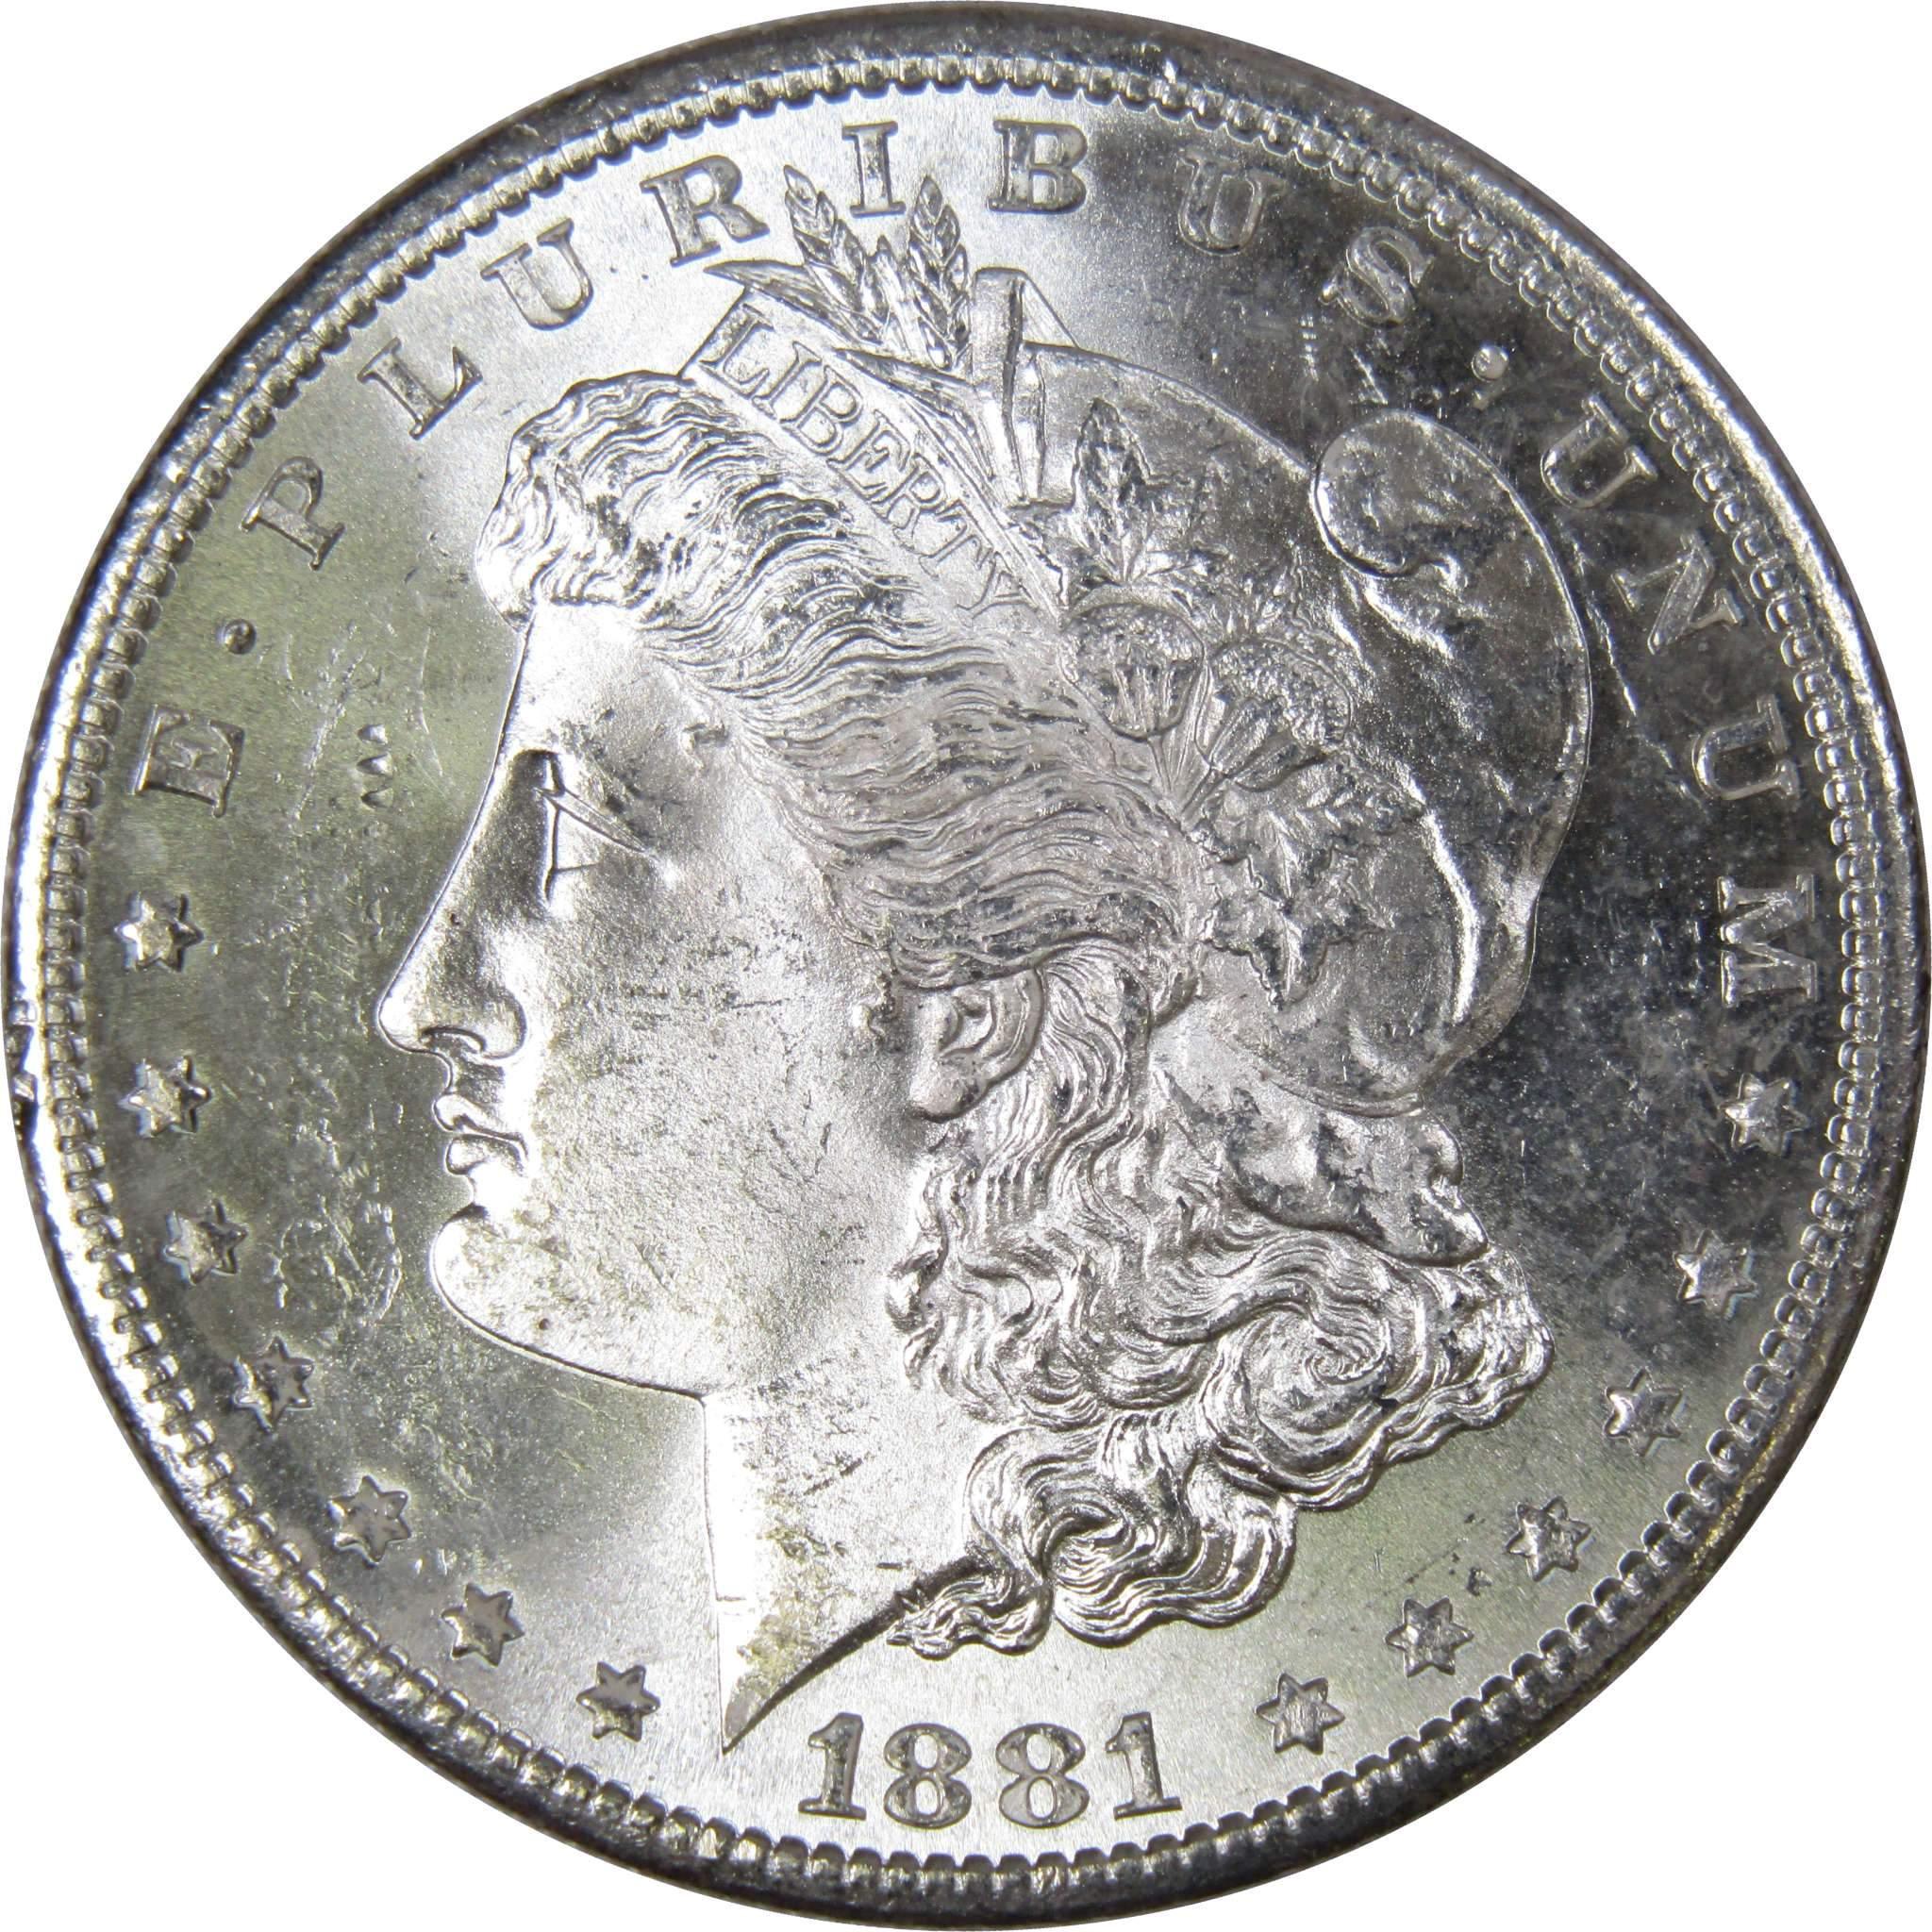 1881 S Morgan Dollar BU Choice Uncirculated Mint State 90% Silver $1 US Coin - Morgan coin - Morgan silver dollar - Morgan silver dollar for sale - Profile Coins &amp; Collectibles